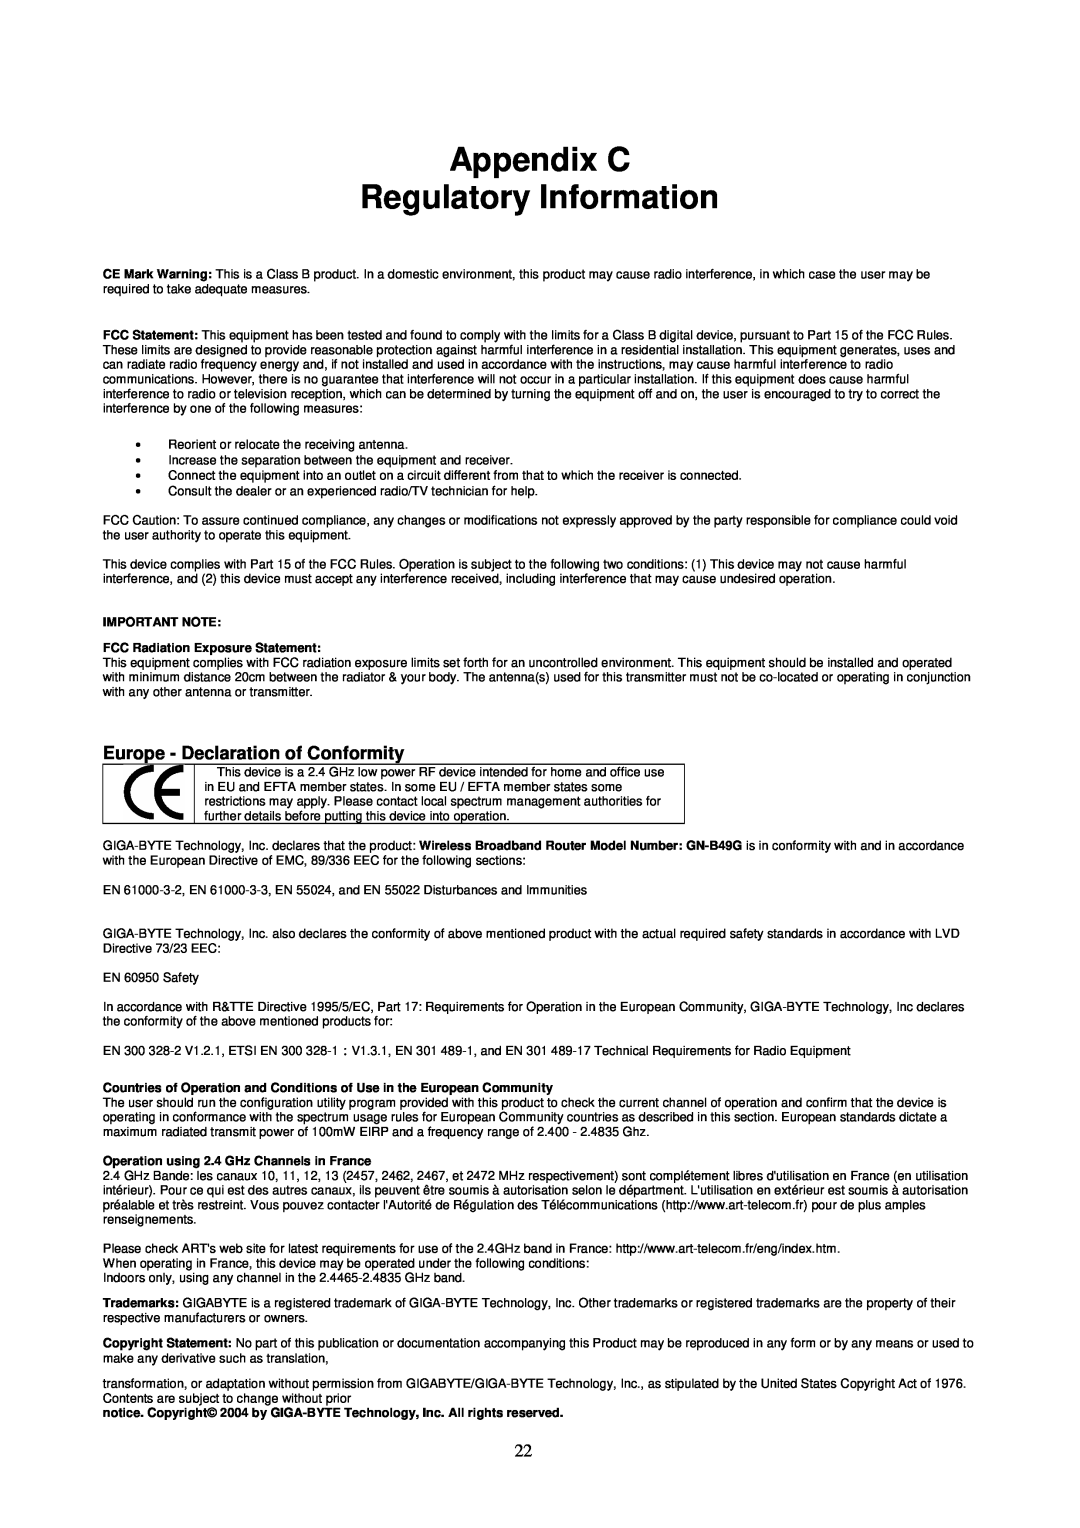 Gigabyte GN-WPKG user manual Appendix C Regulatory Information, Europe - Declaration of Conformity 